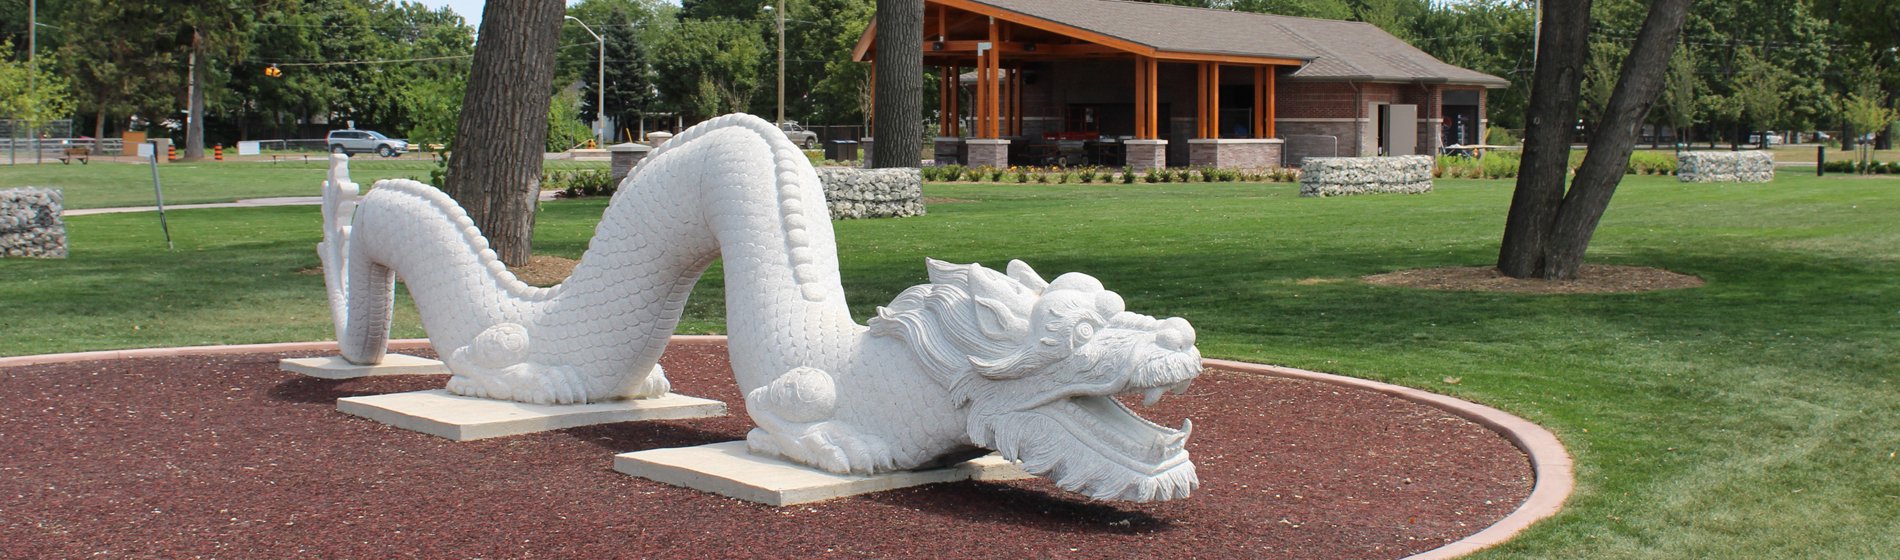 Dragon sculpture at Tecumseh Waterfront Park